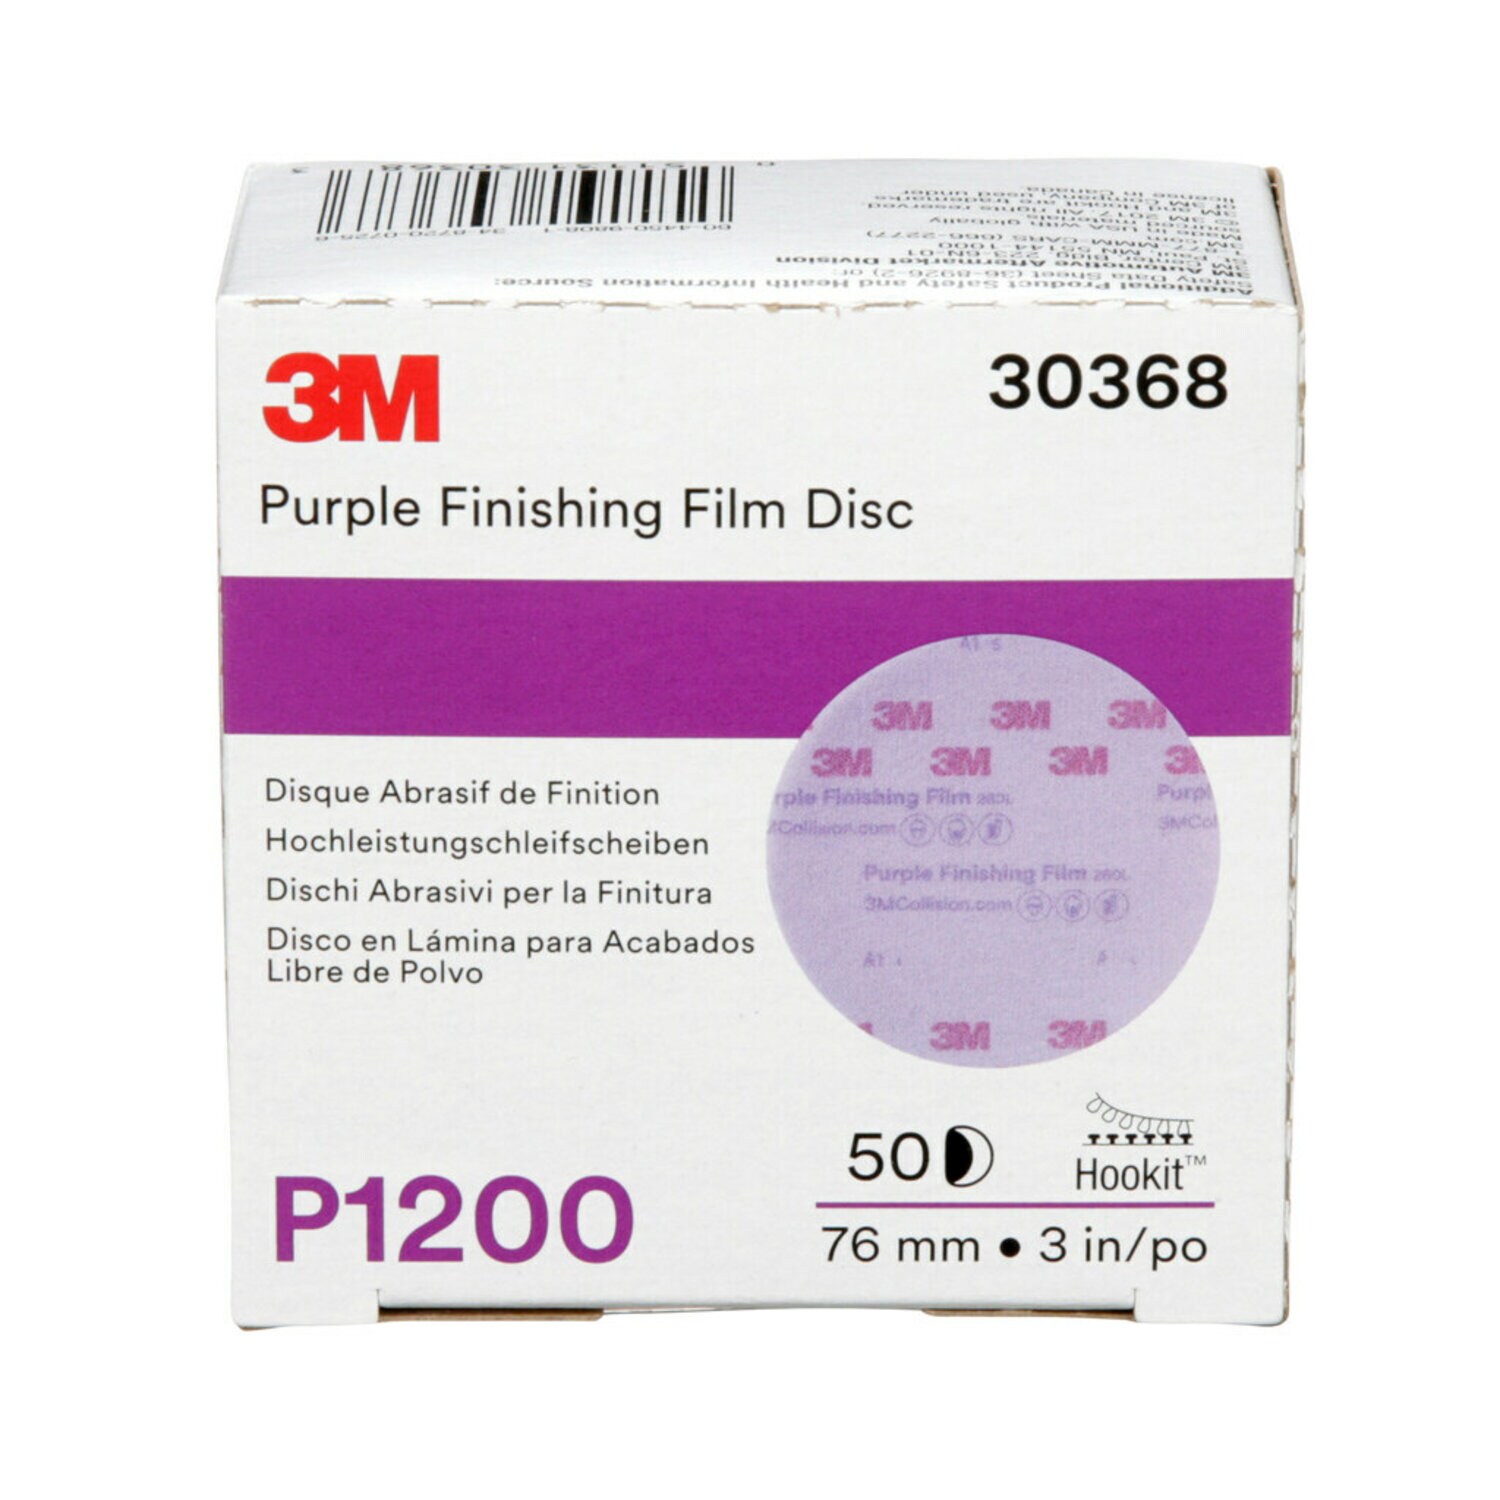 7100123056 - 3M Hookit Purple Finishing Film Abrasive Disc 260L, 30368, 3 in,
P1200, 50 discs per carton, 4 cartons per case